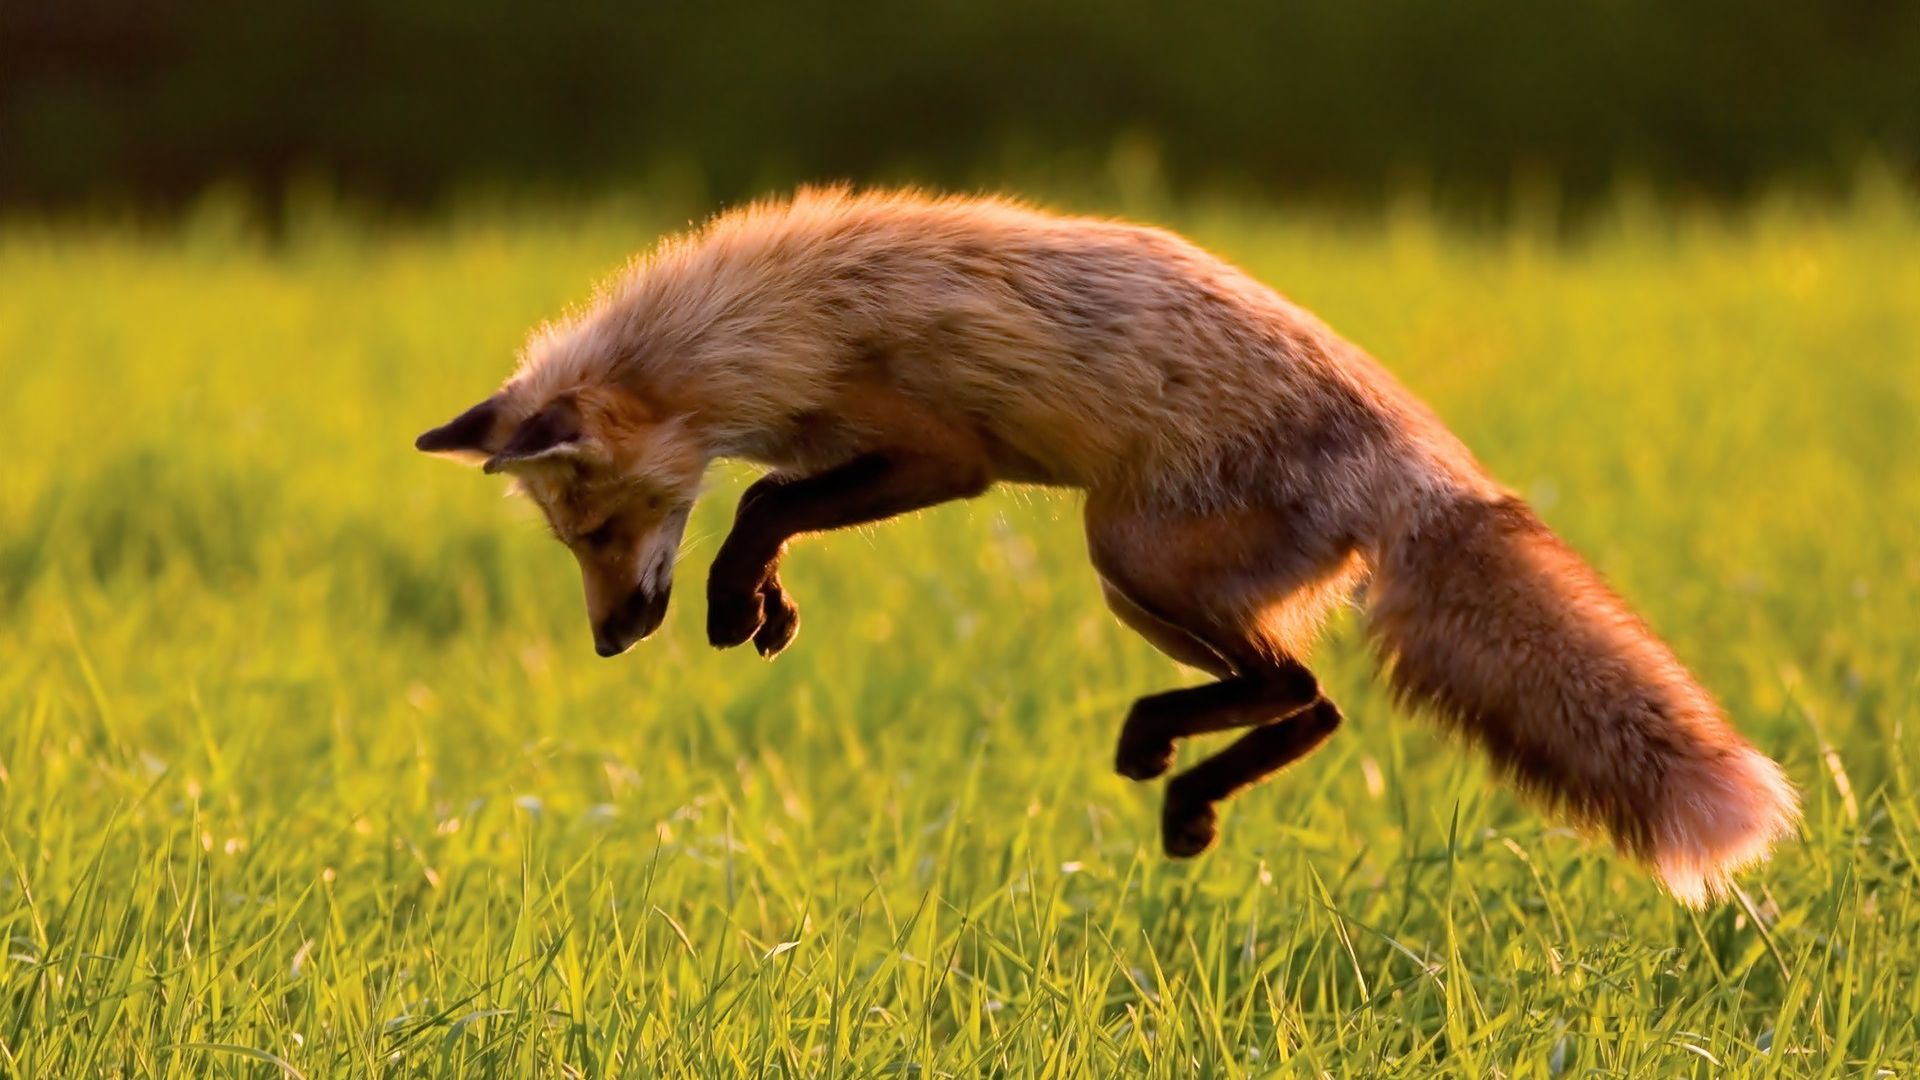 Wallpaper Fox jumping in grass field